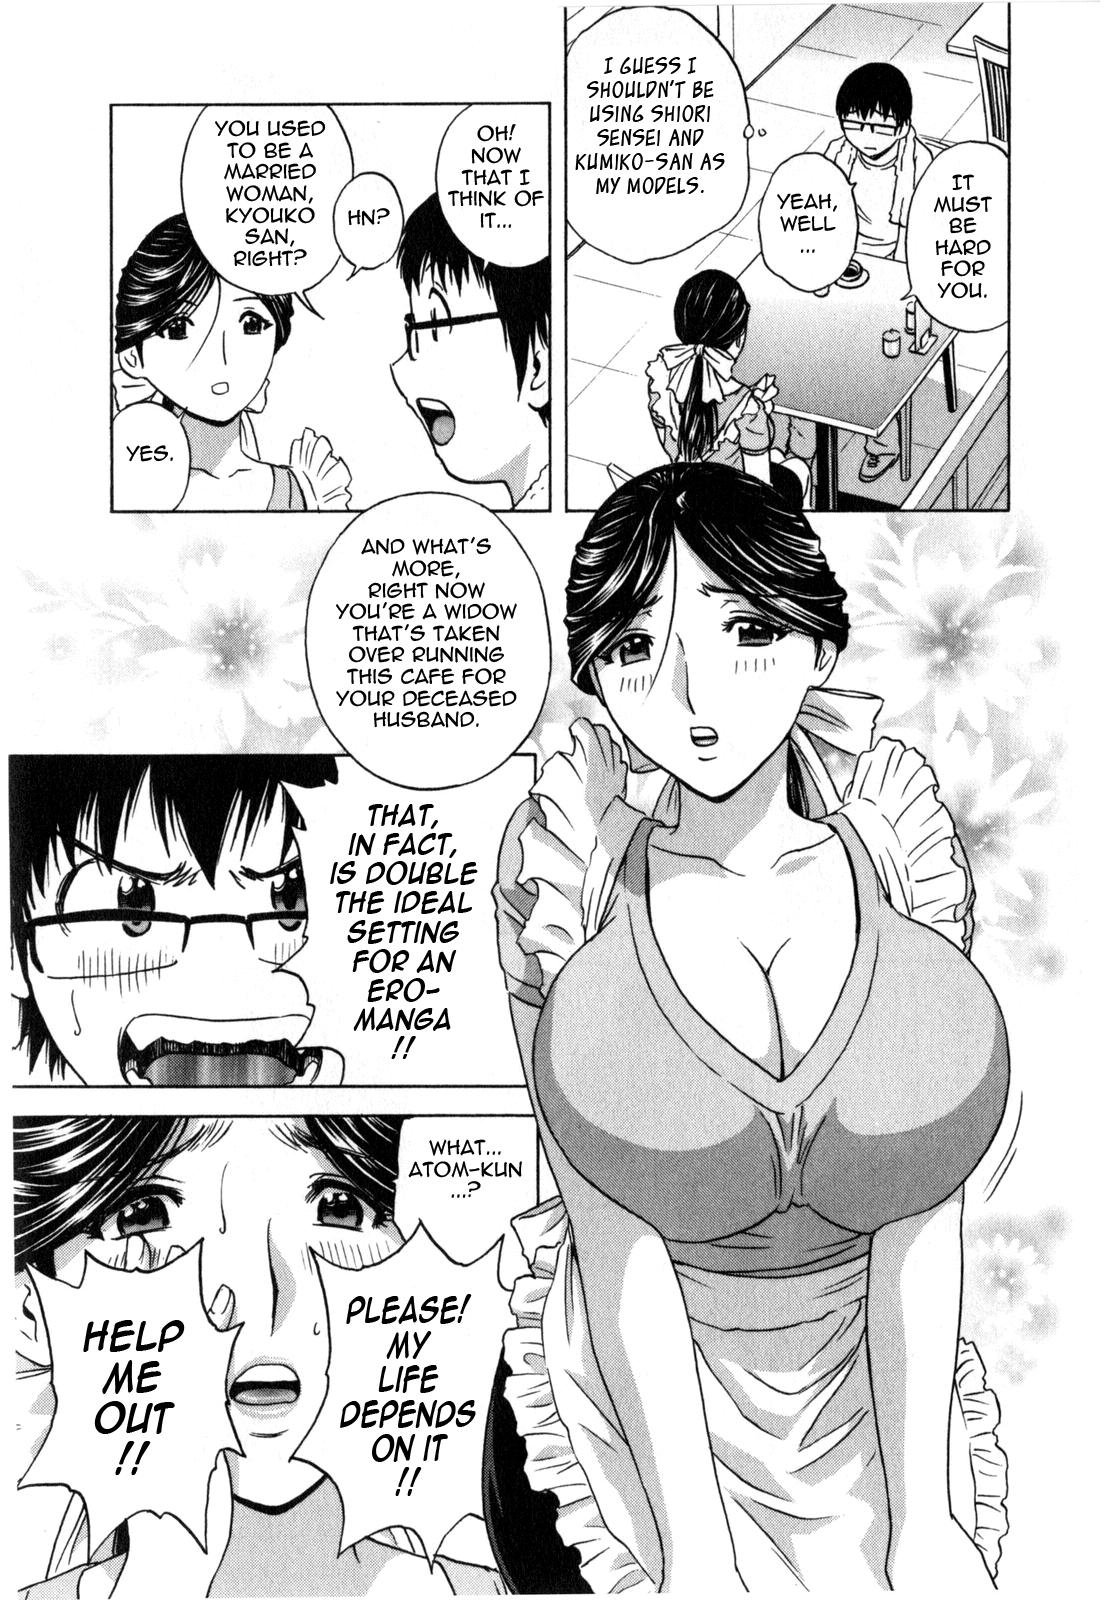 [Hidemaru] Life with Married Women Just Like a Manga 1 - Ch. 1-7 [English] {Tadanohito} 72